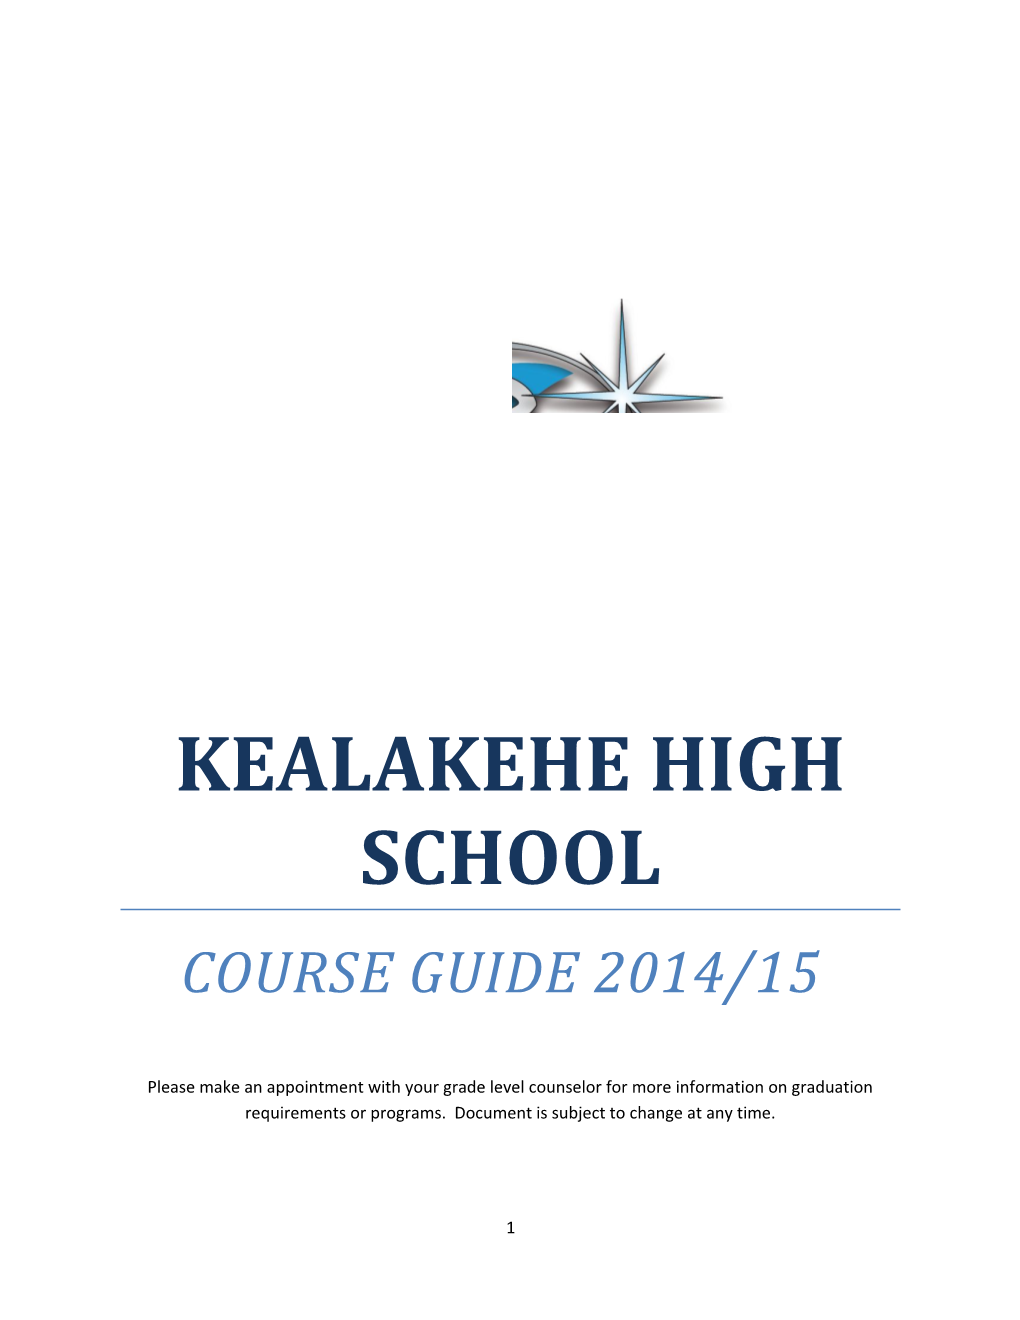 Kealakehe High School